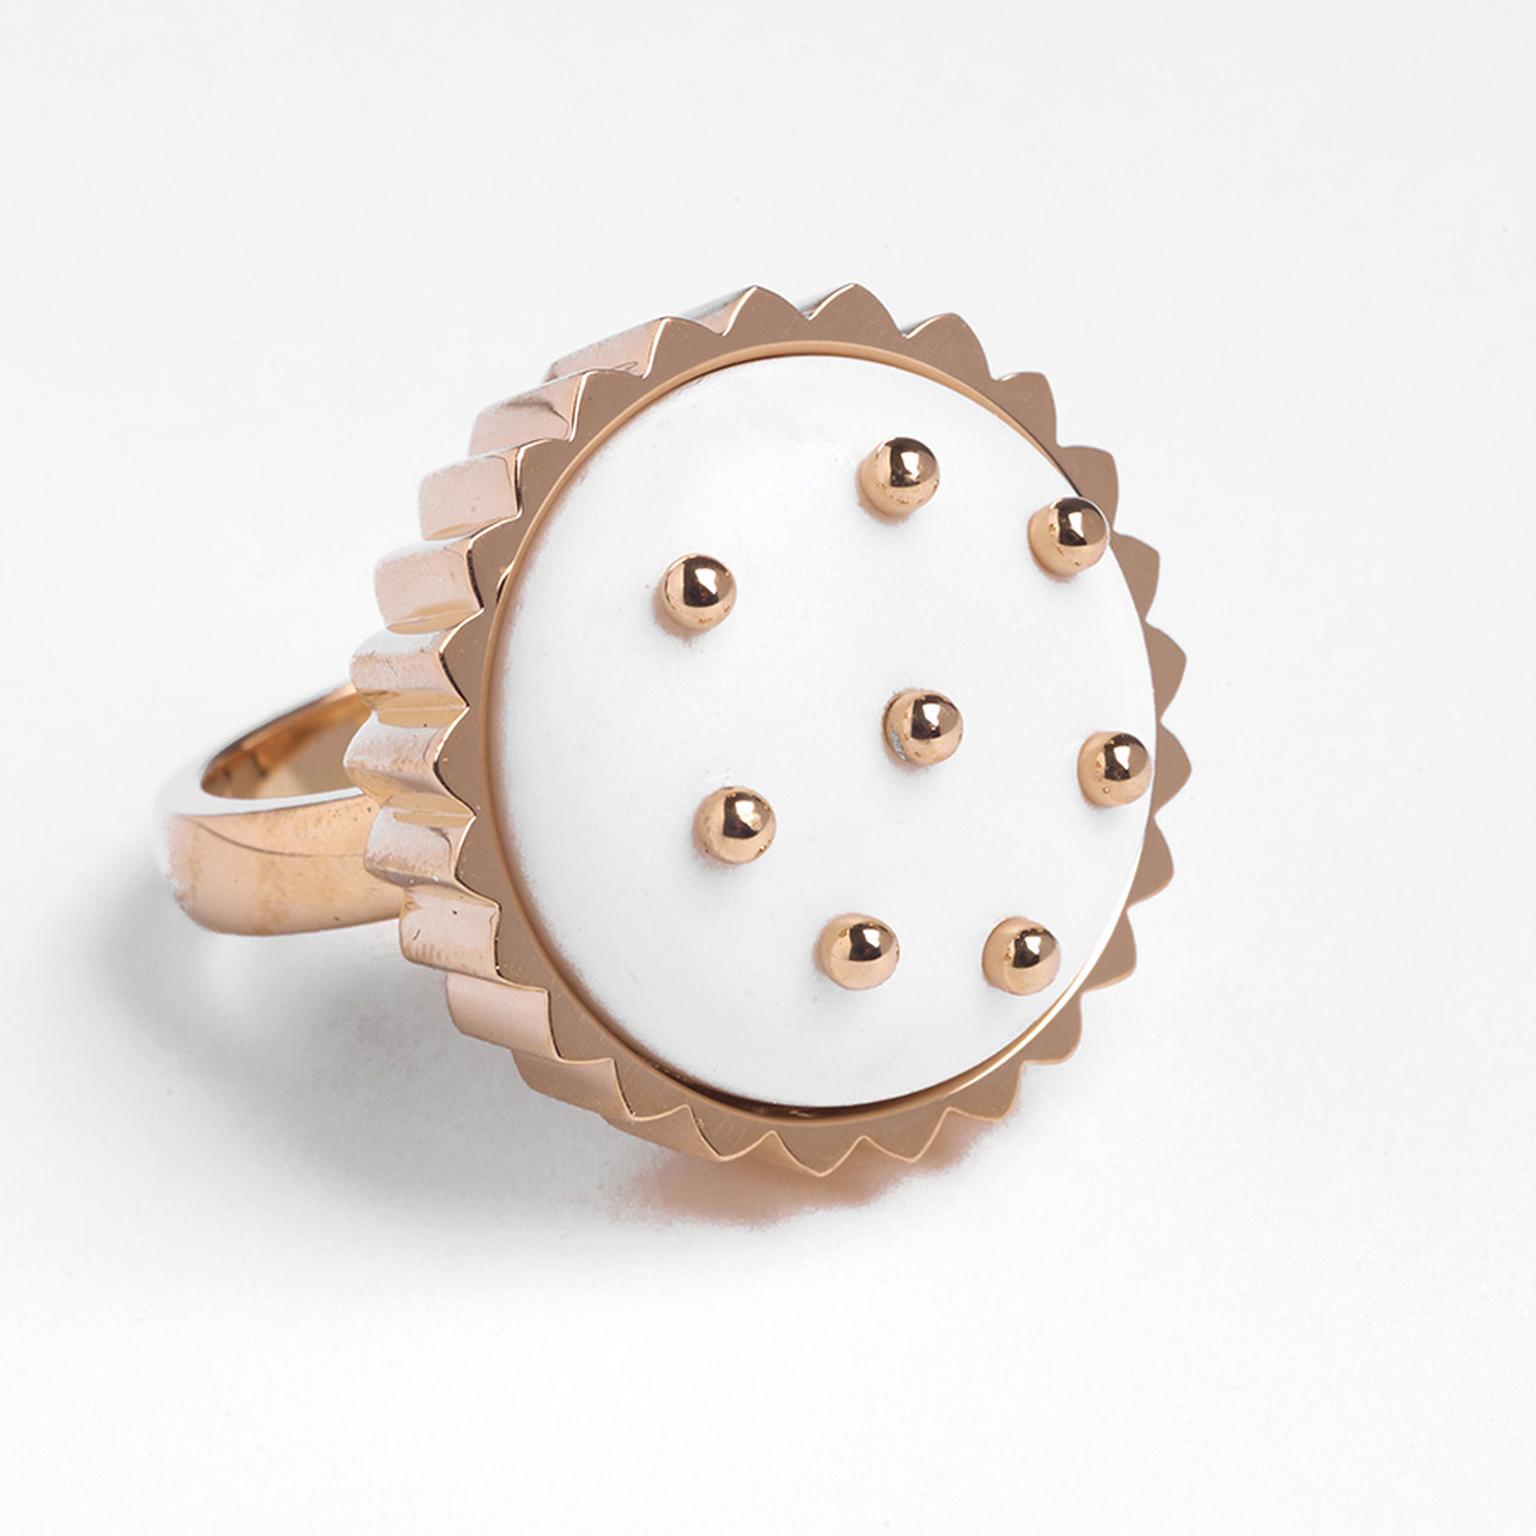 Cora-Sheibani-Linzer-Torte-Ring--£4300-.jpg